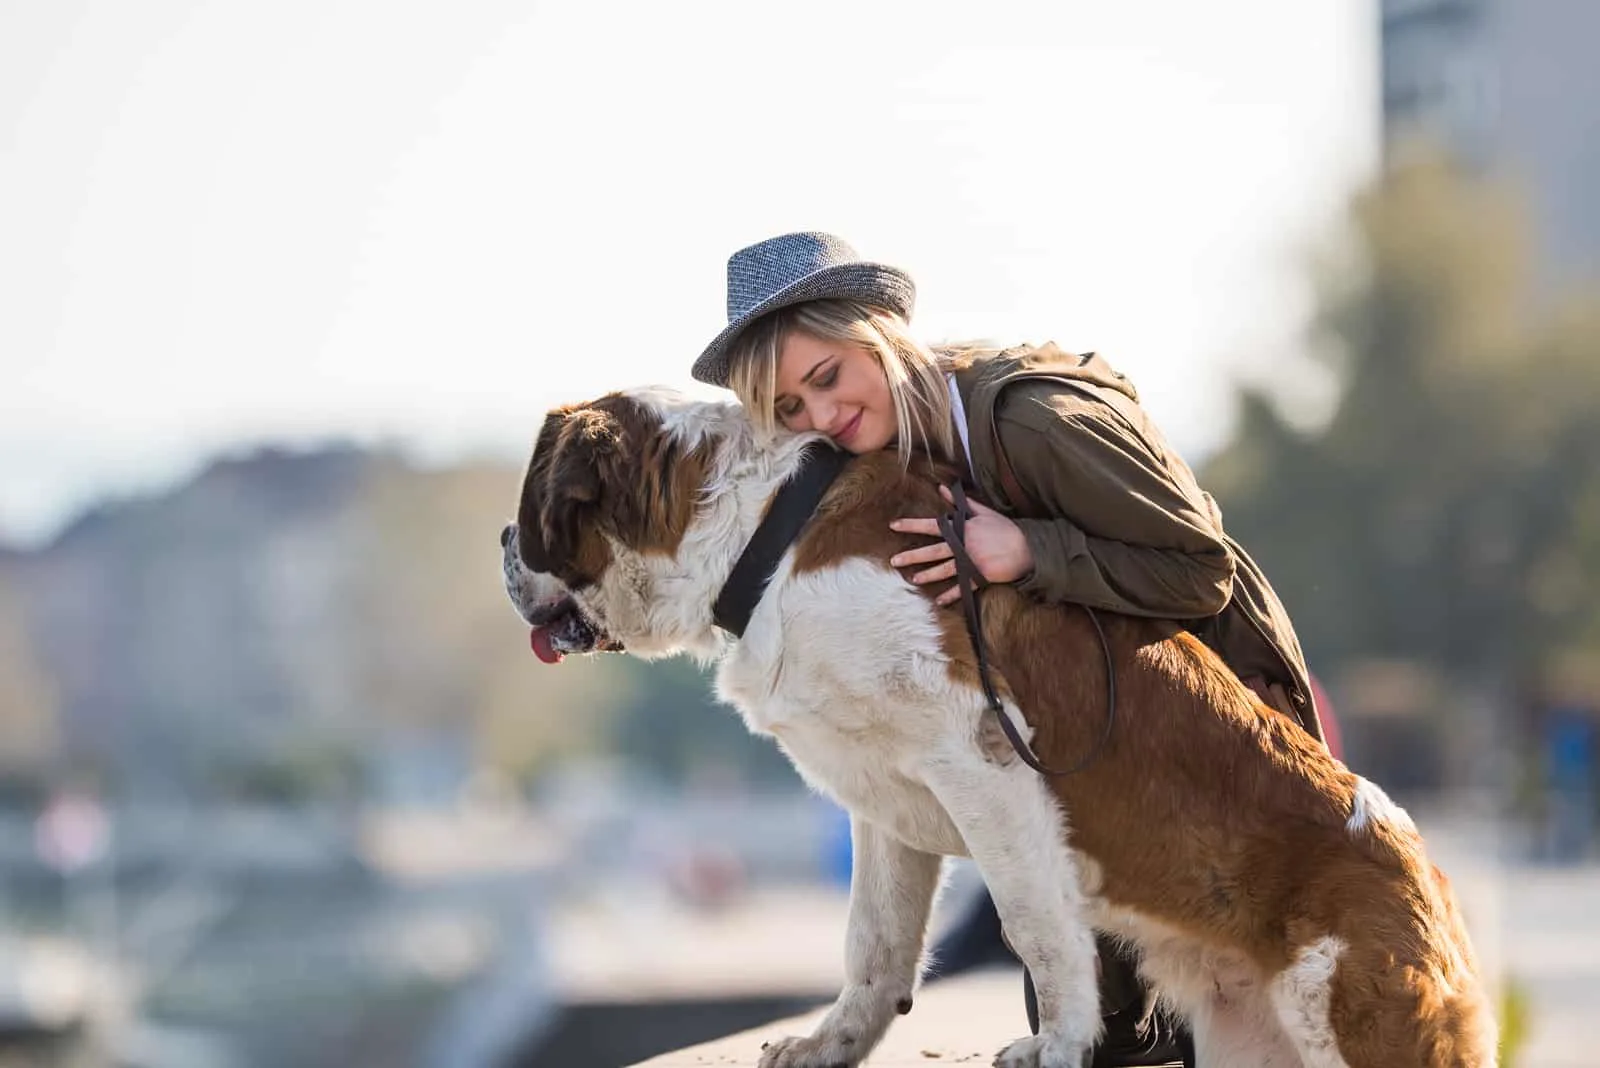 the girl hugs the Saint Bernard dog